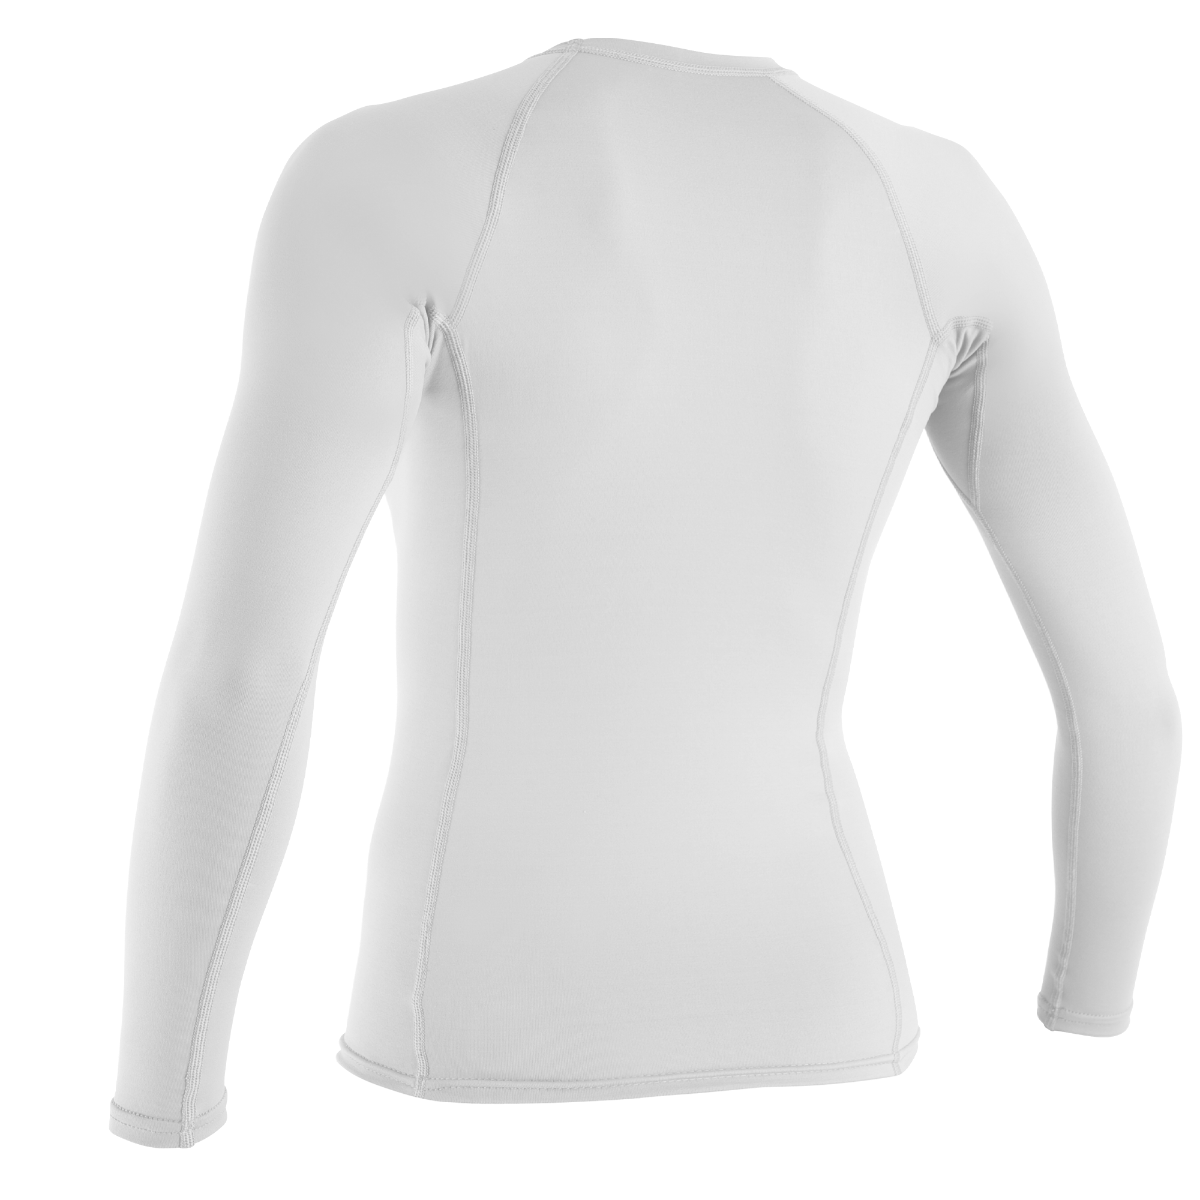 O'Neill Womens Basic Skins L/S Rash Vest - White-Rash Vests & Thermal Vests-troggs.com